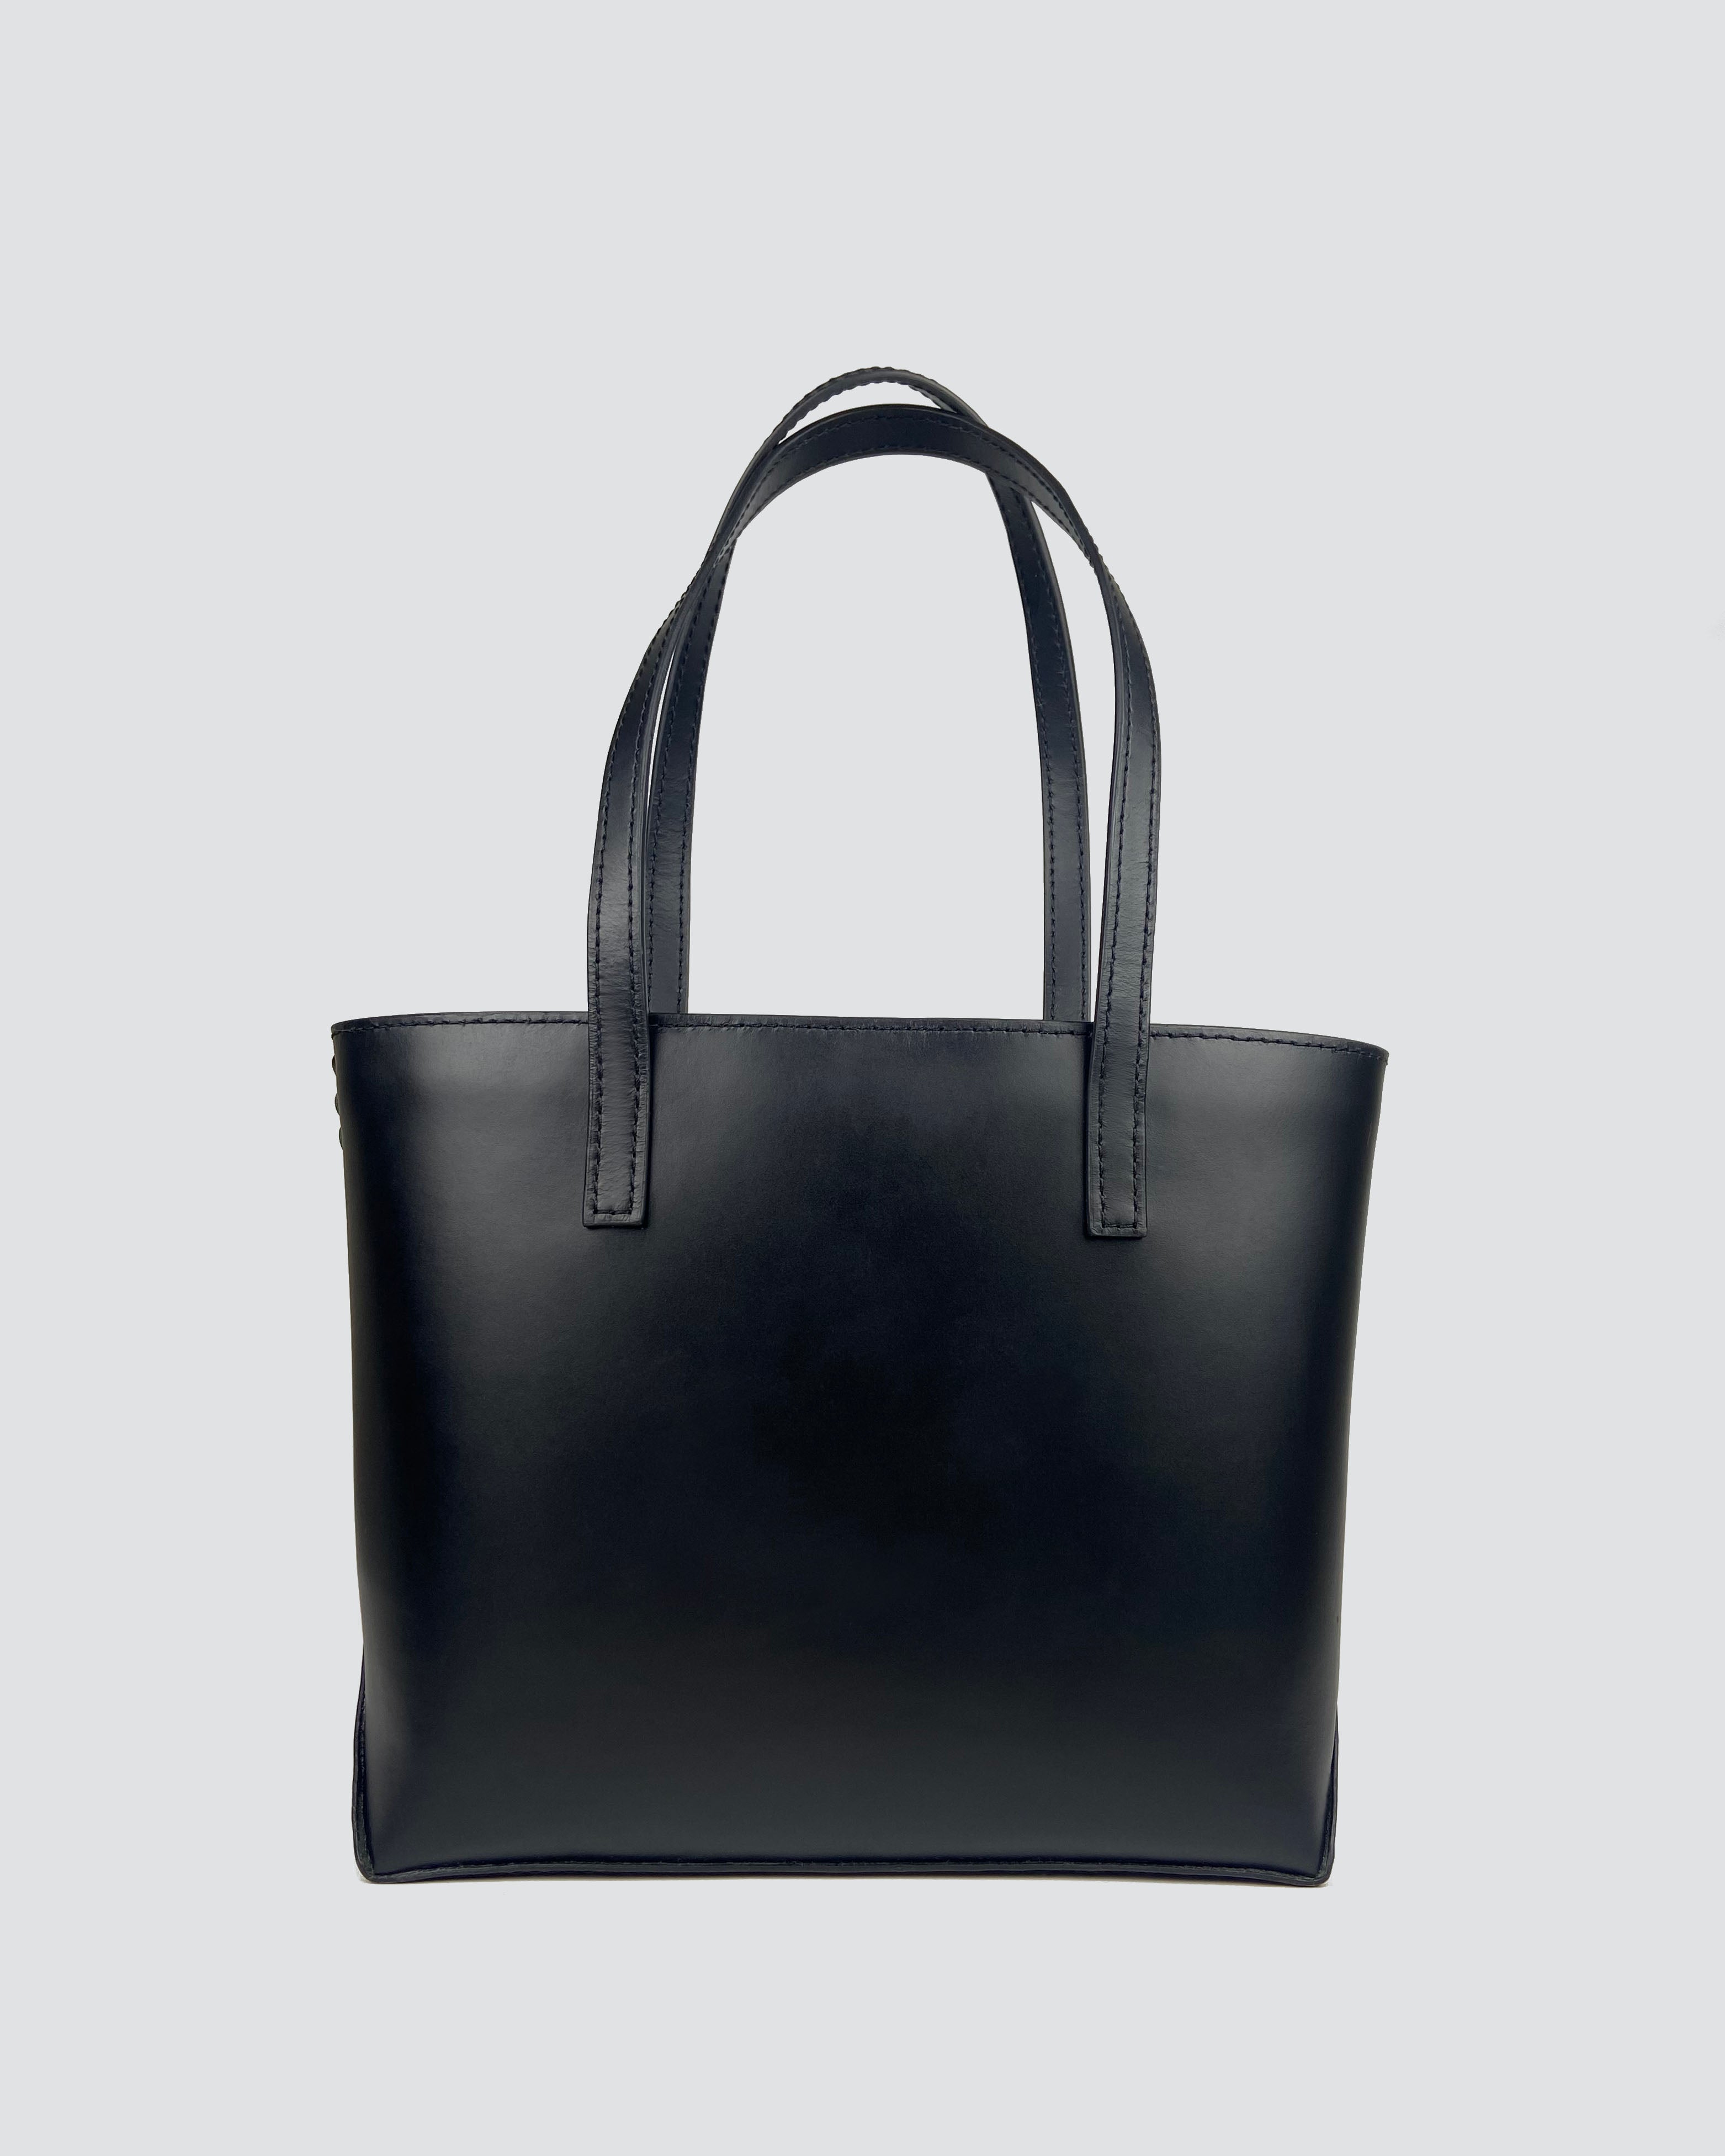 Tote Bag “Charlotte” - Black